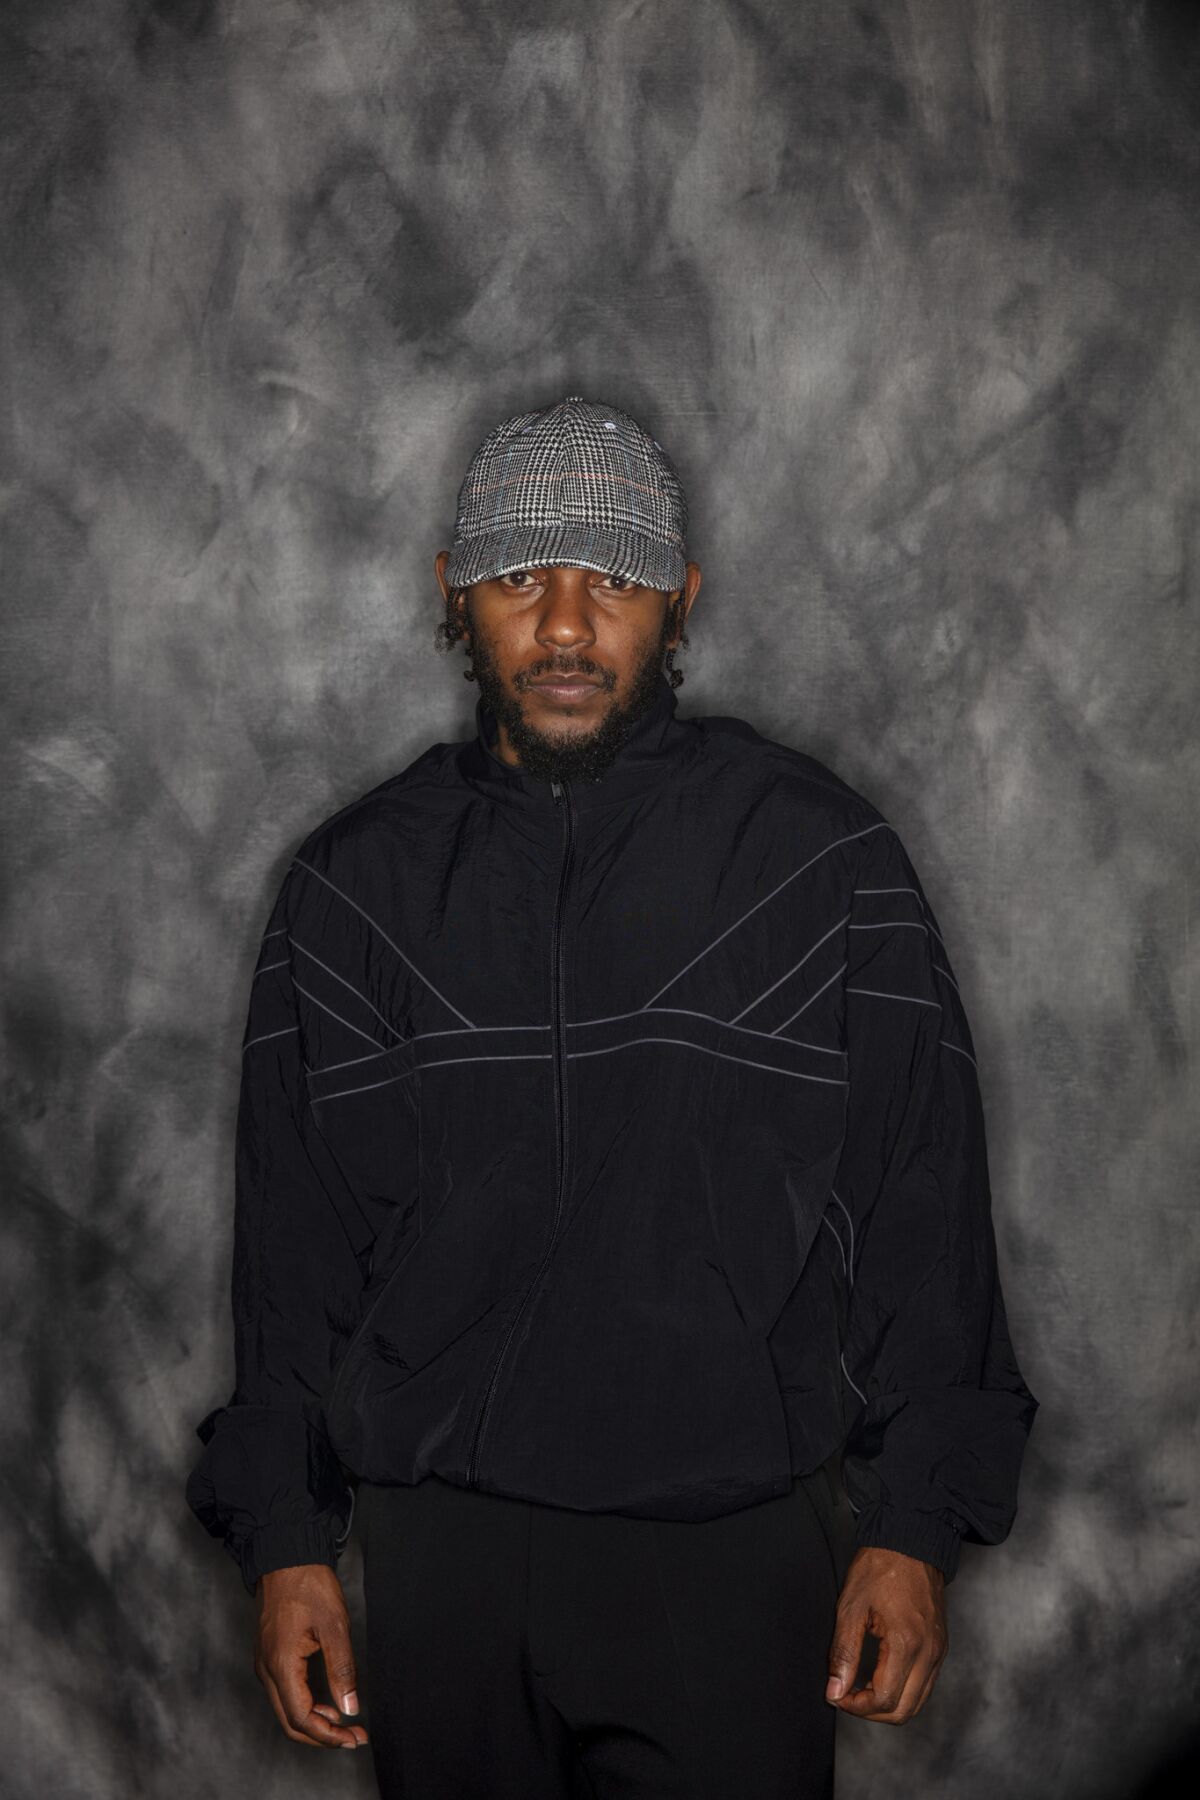 Grammy and Pulitzer Prize-winning hip-hop artist Kendrick Lamar